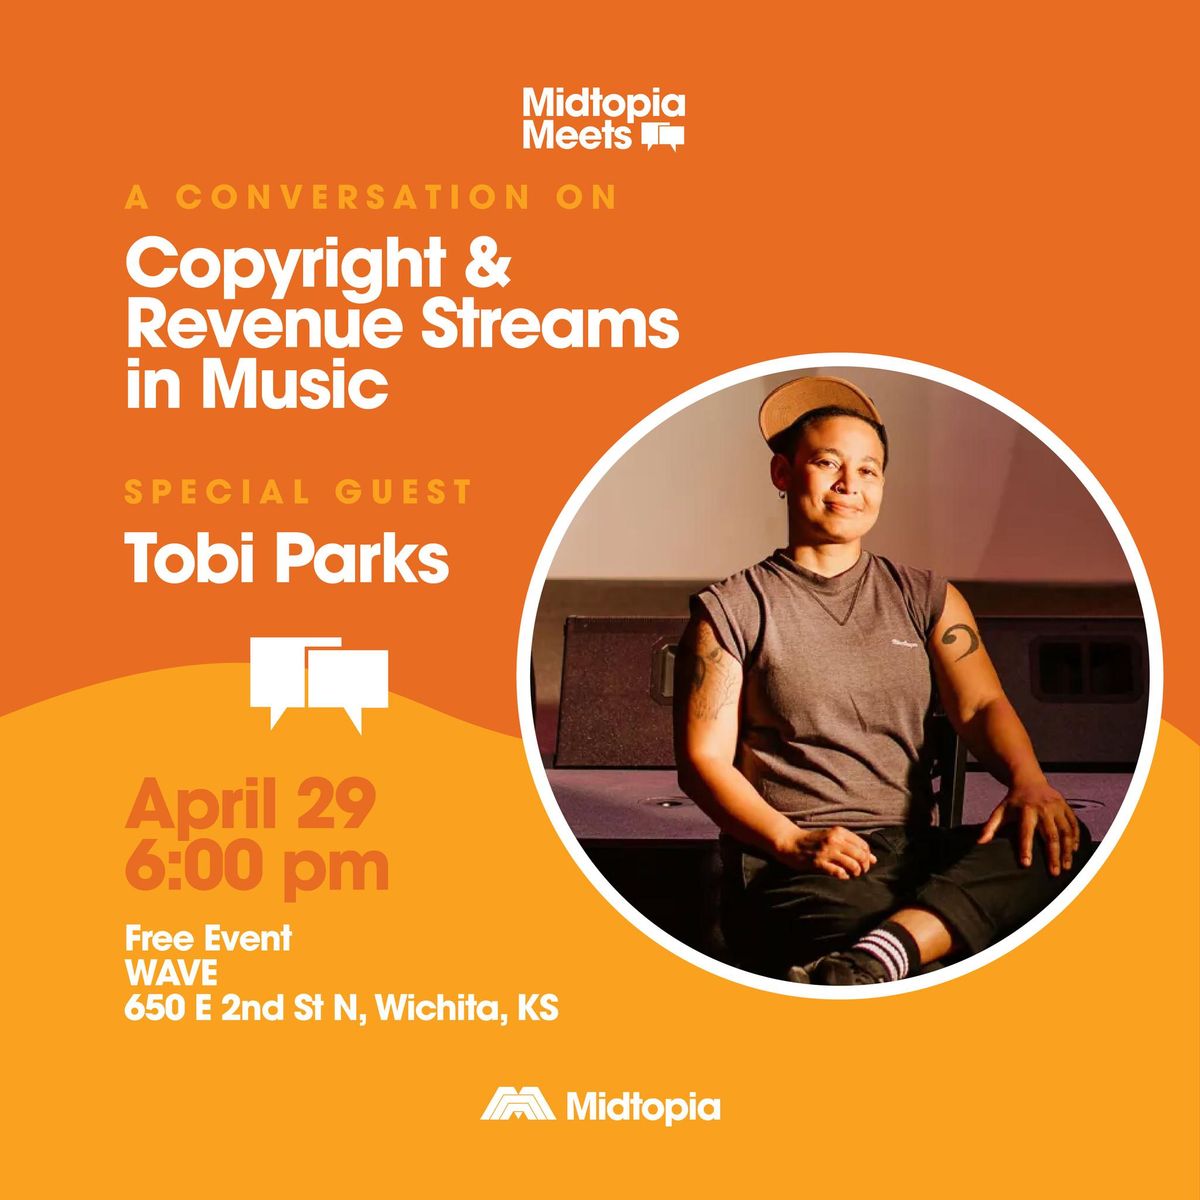 Midtopia Meets - Tobi Parks